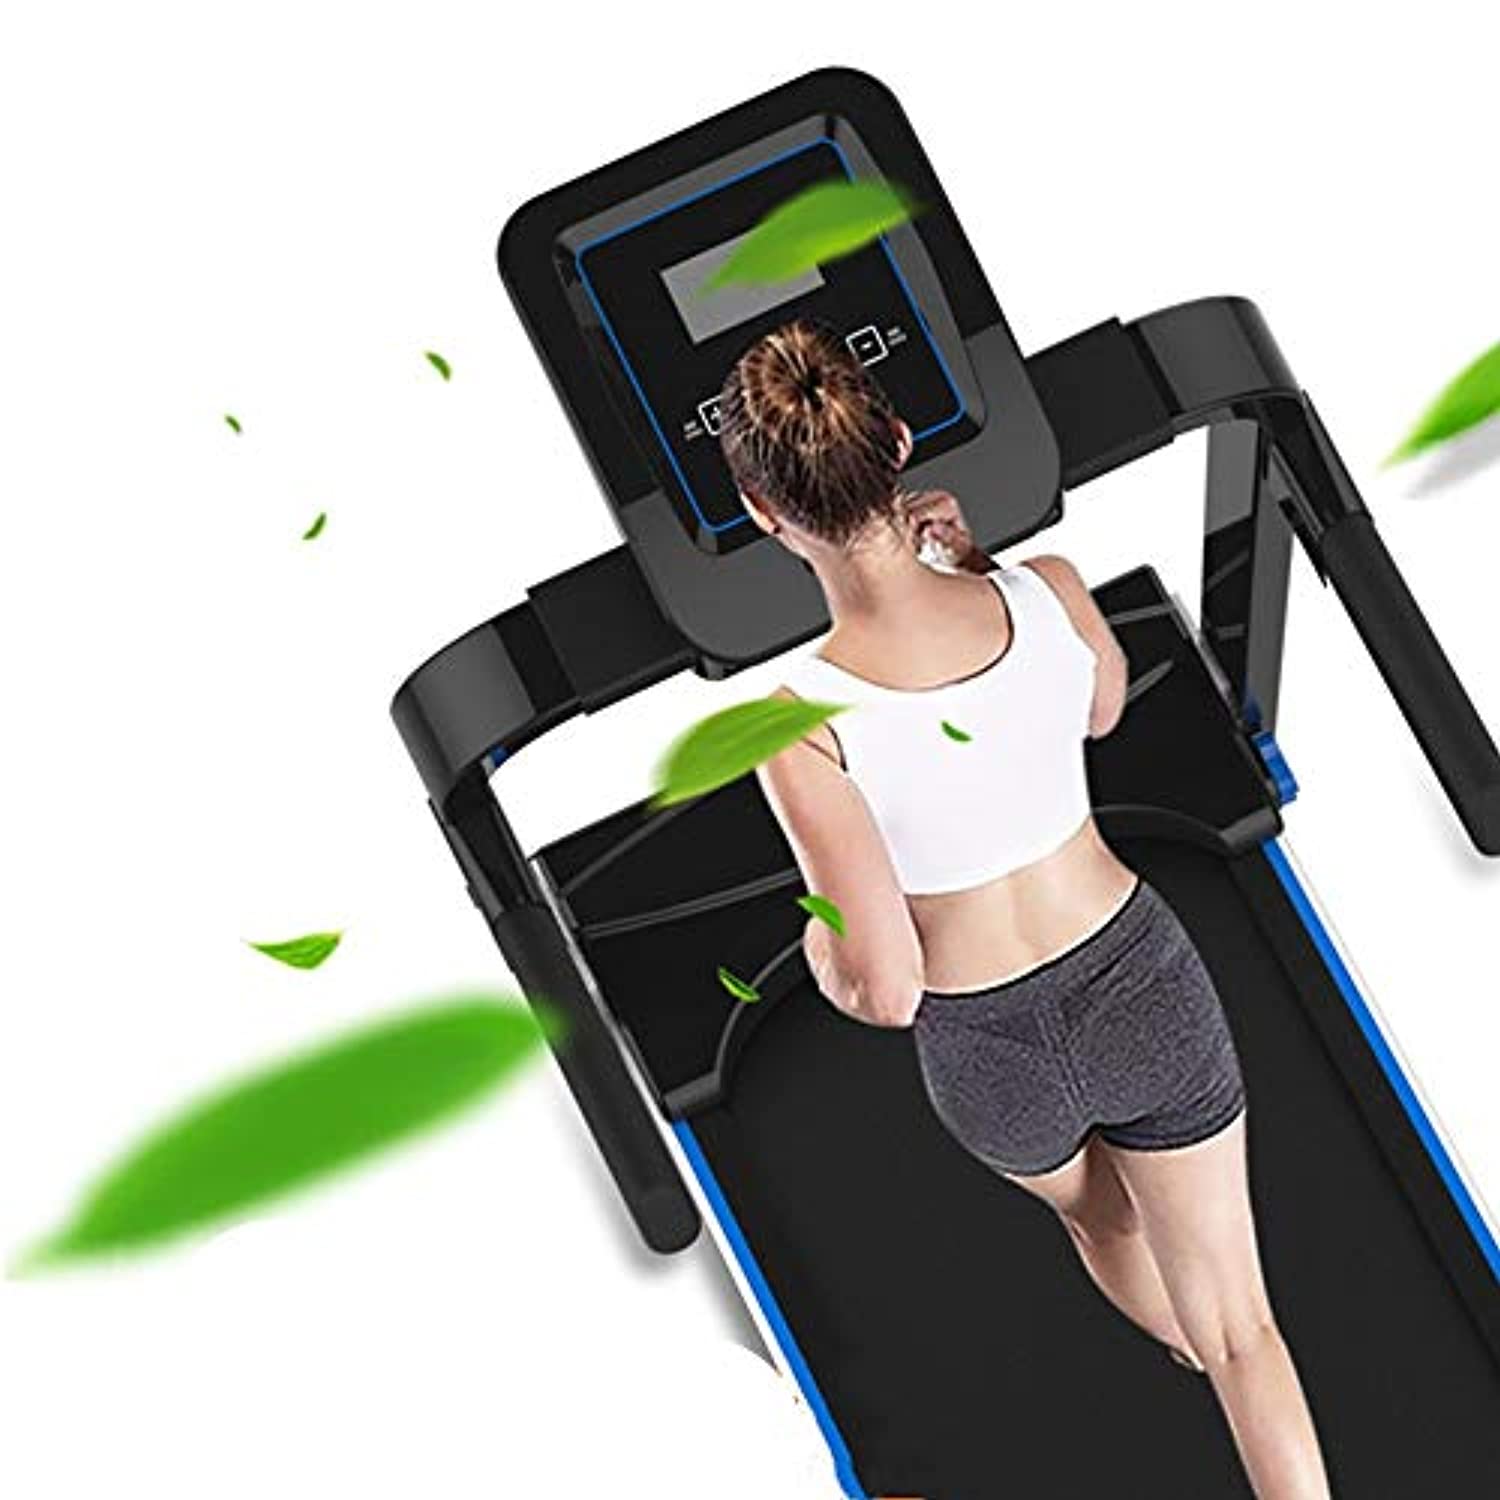 Zzfni Treadmill Small Folding Treadmill Models, Household Ultra-Quiet Stepper, Fitness Equipment, Indoor Gym Dormitory Foldable Treadmill